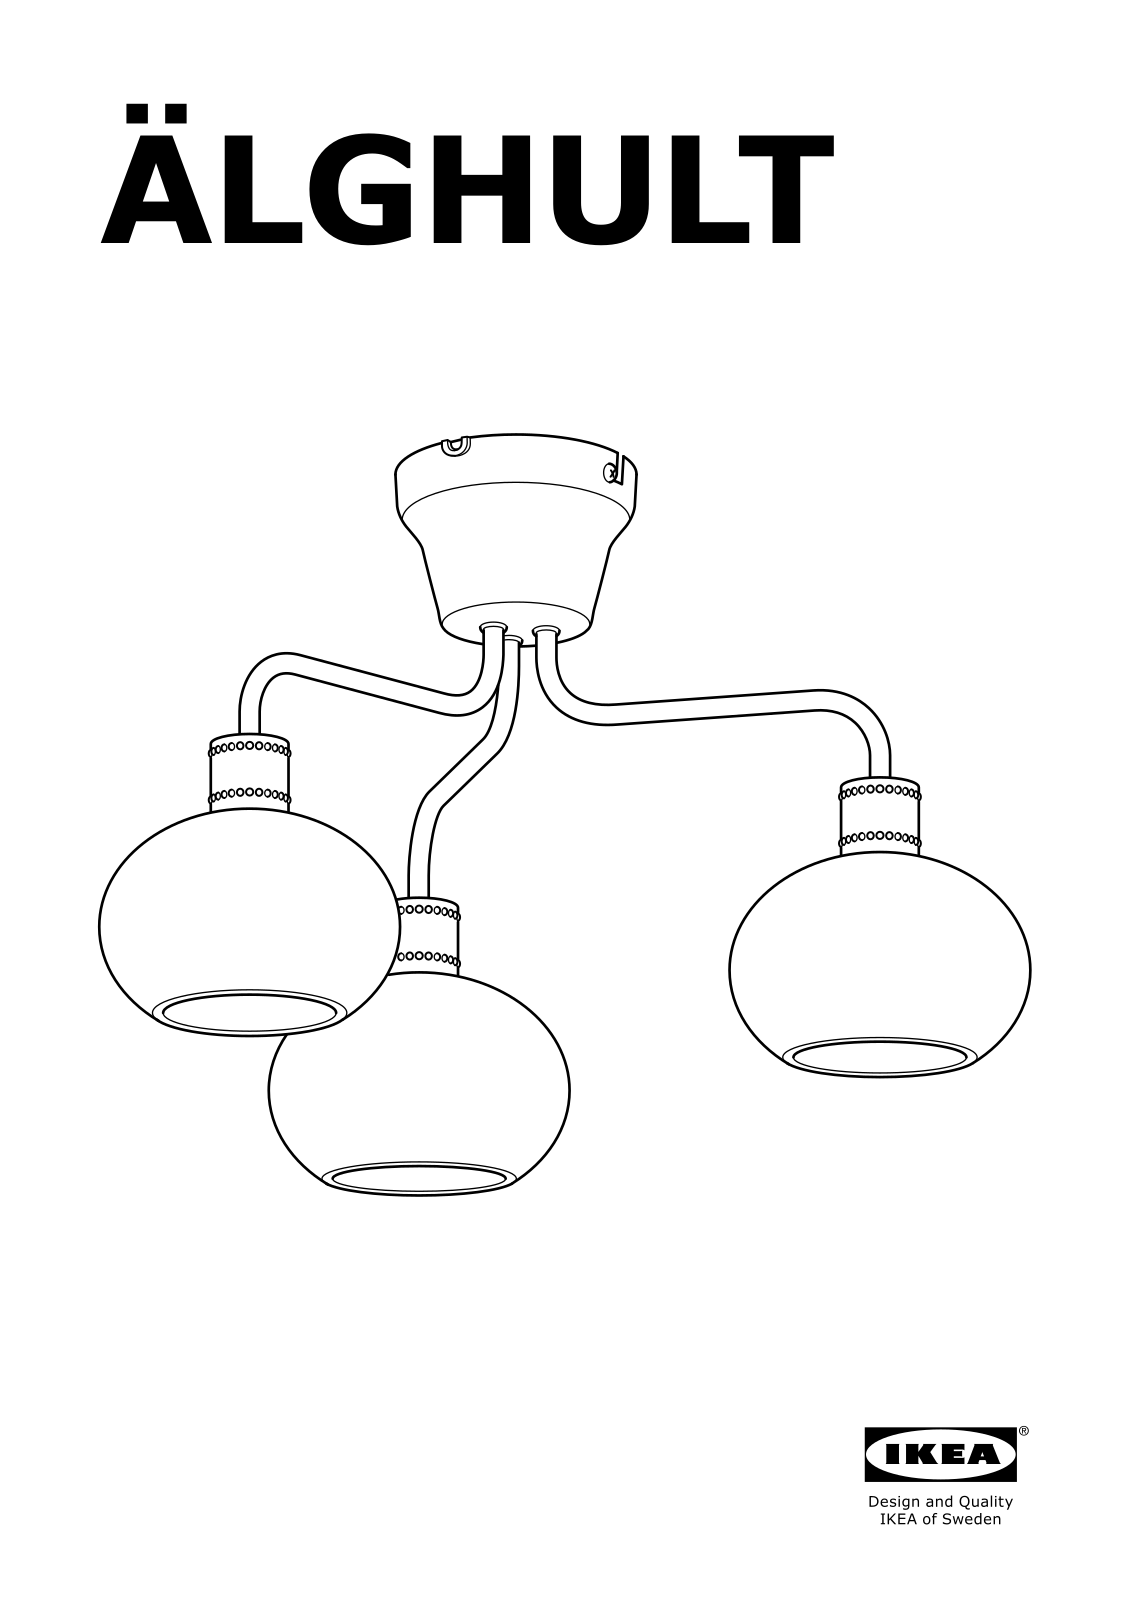 IKEA ALGHULT User Manual